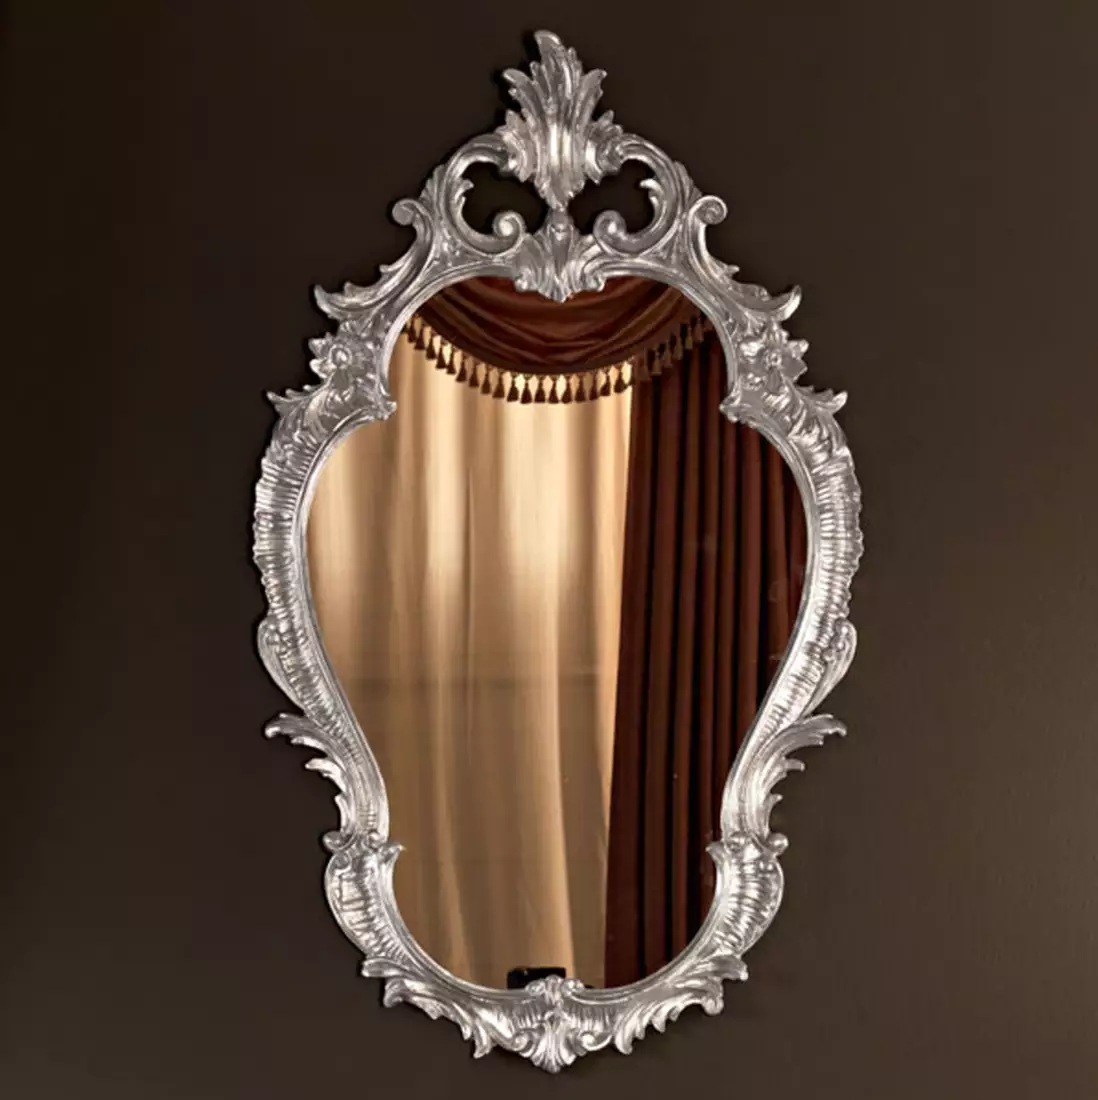 Silver-leaf-console-hardwood-furniture-Villa-Venezia-collection-Modenese-Gastonehtgf